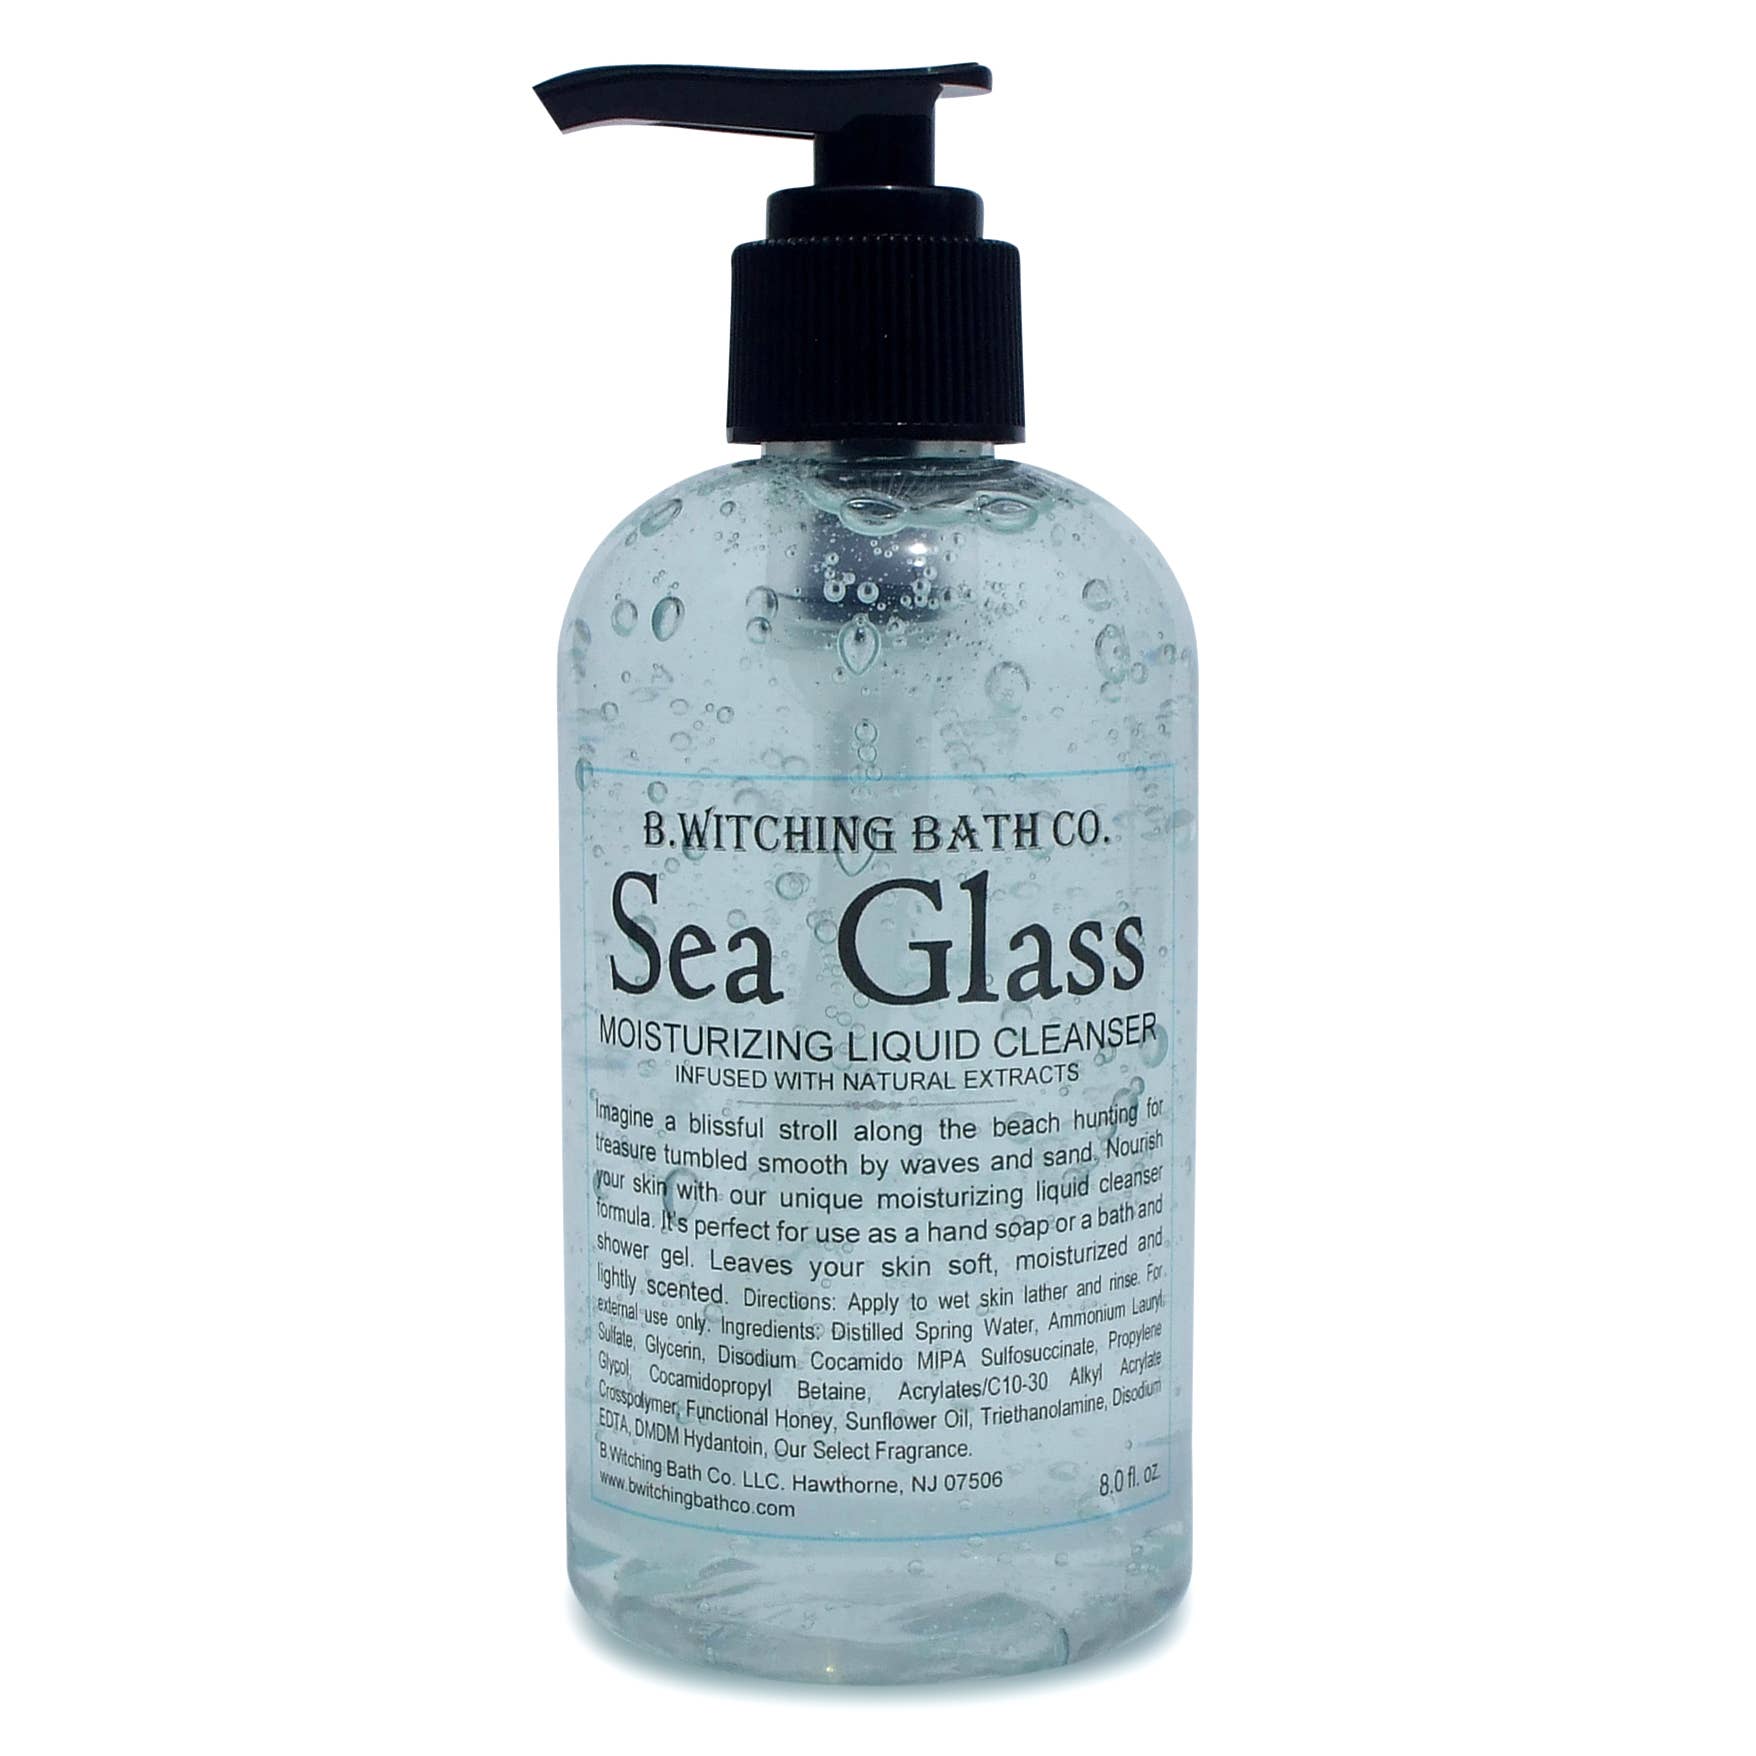 Sea Glass Moisturizing Liquid Cleansers 8oz.